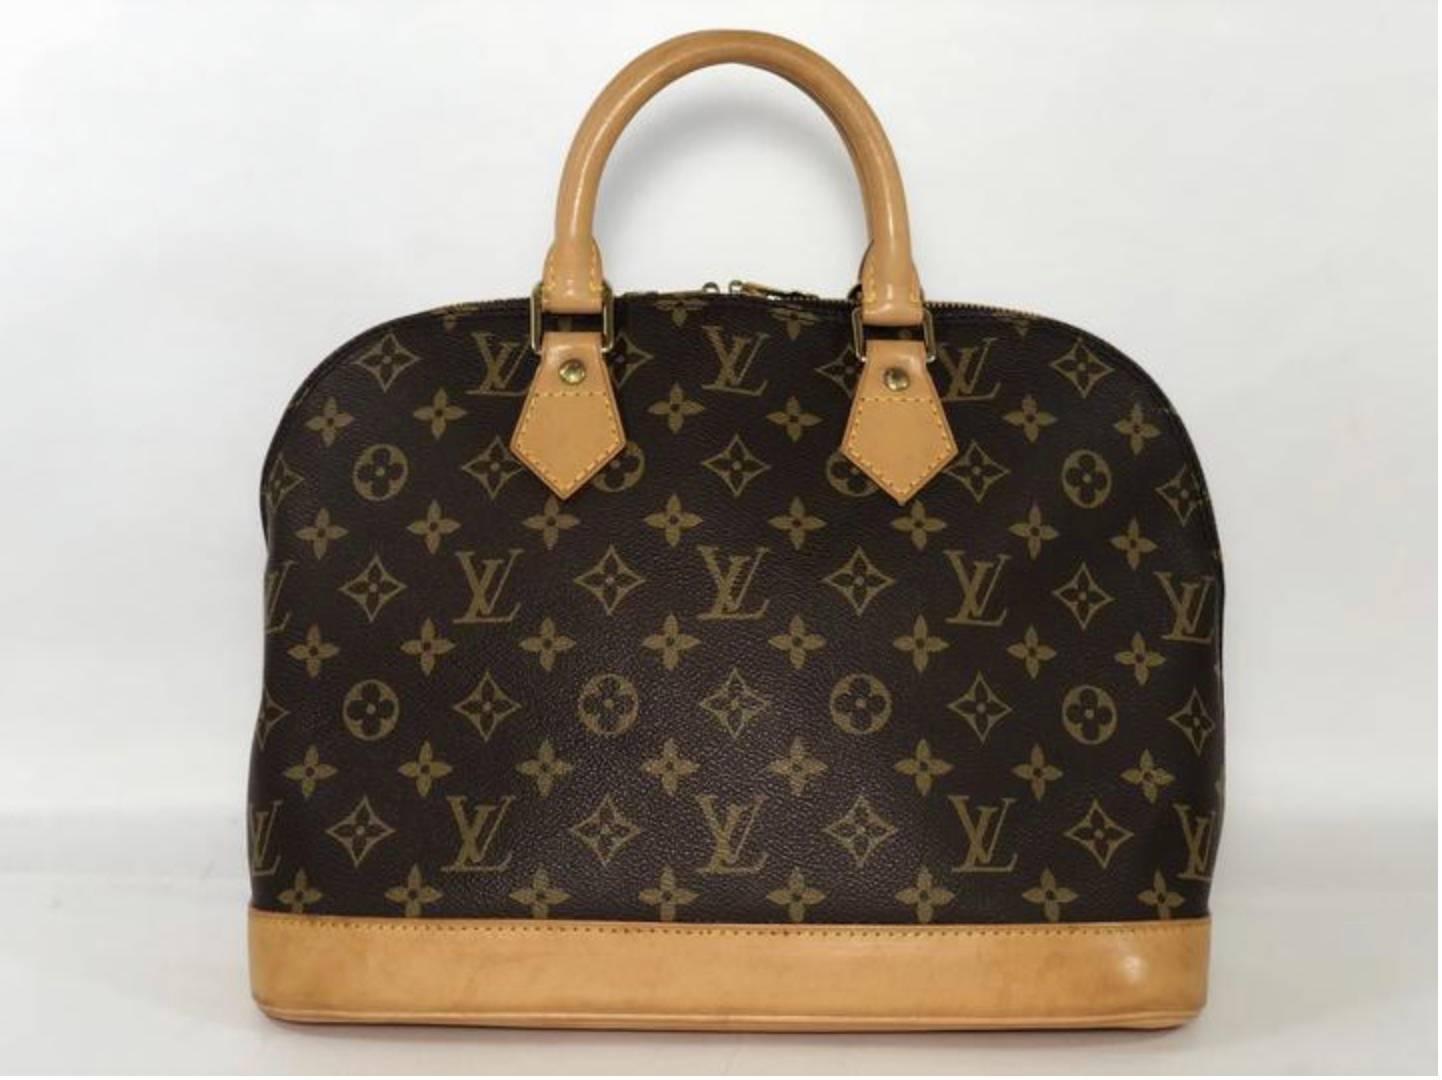 Louis Vuitton Monogram Alma PM Satchel Bag In Excellent Condition For Sale In Saint Charles, IL